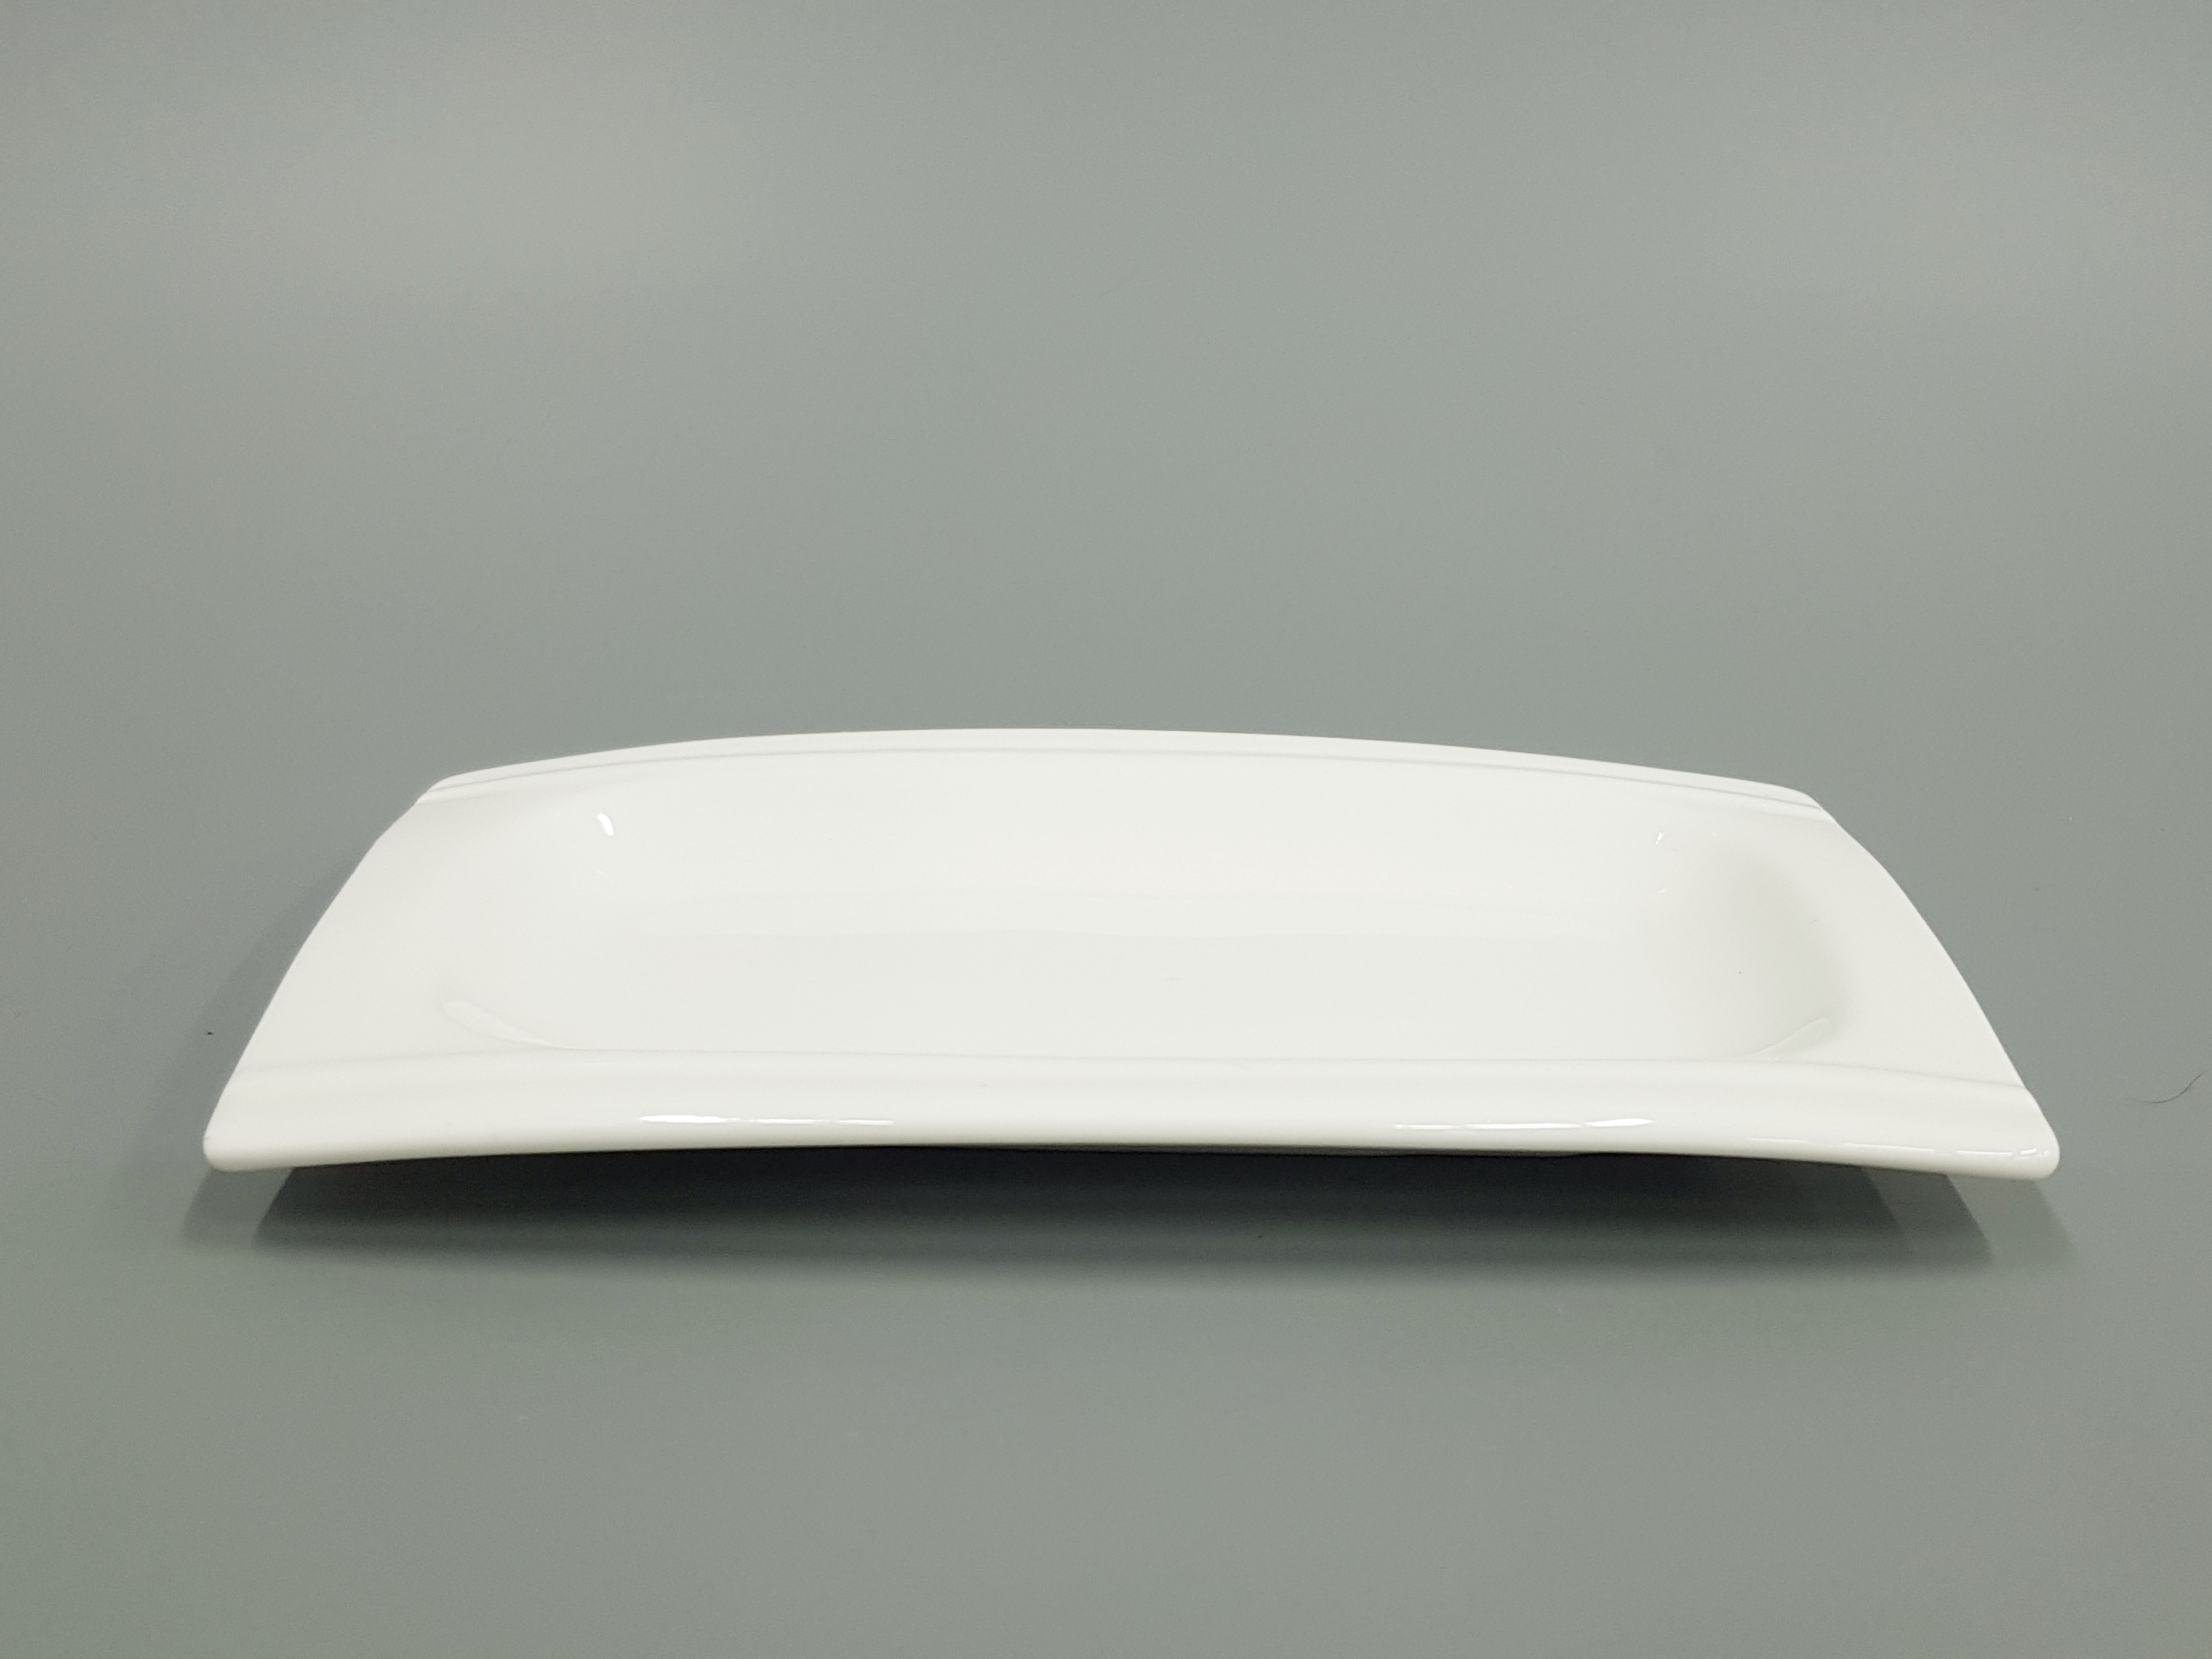 Тарелка длинная. Wilmax блюдо WL-992620 (прямоугольное, 30х16 см). Тарелка прямоугольная плоская. Тарелка белая прямоугольная плоская. Блюдце прямоугольное.